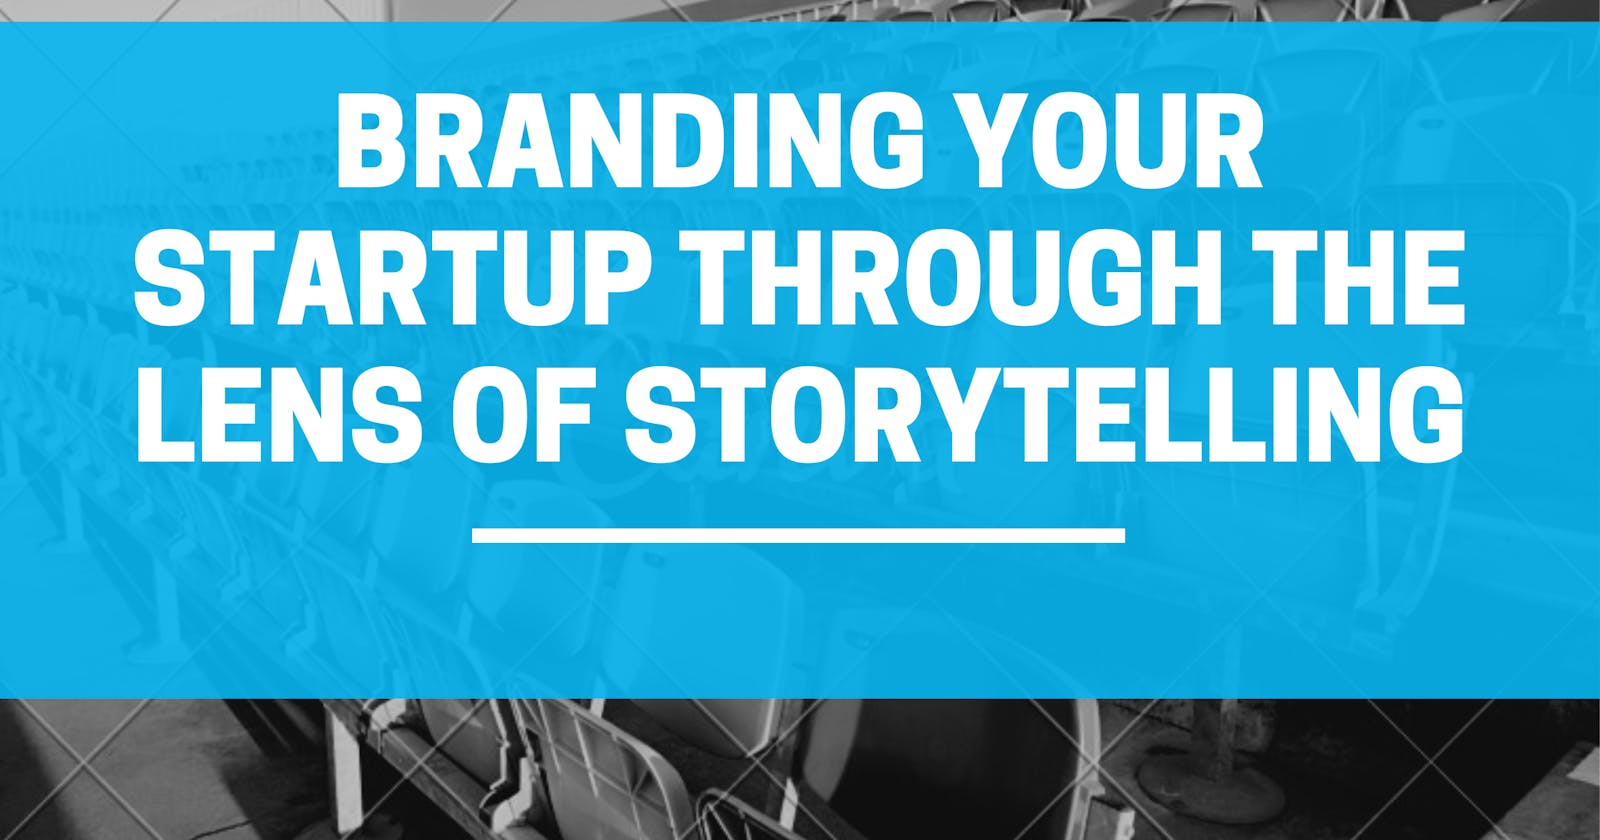 Branding your startup through the lens of storytelling